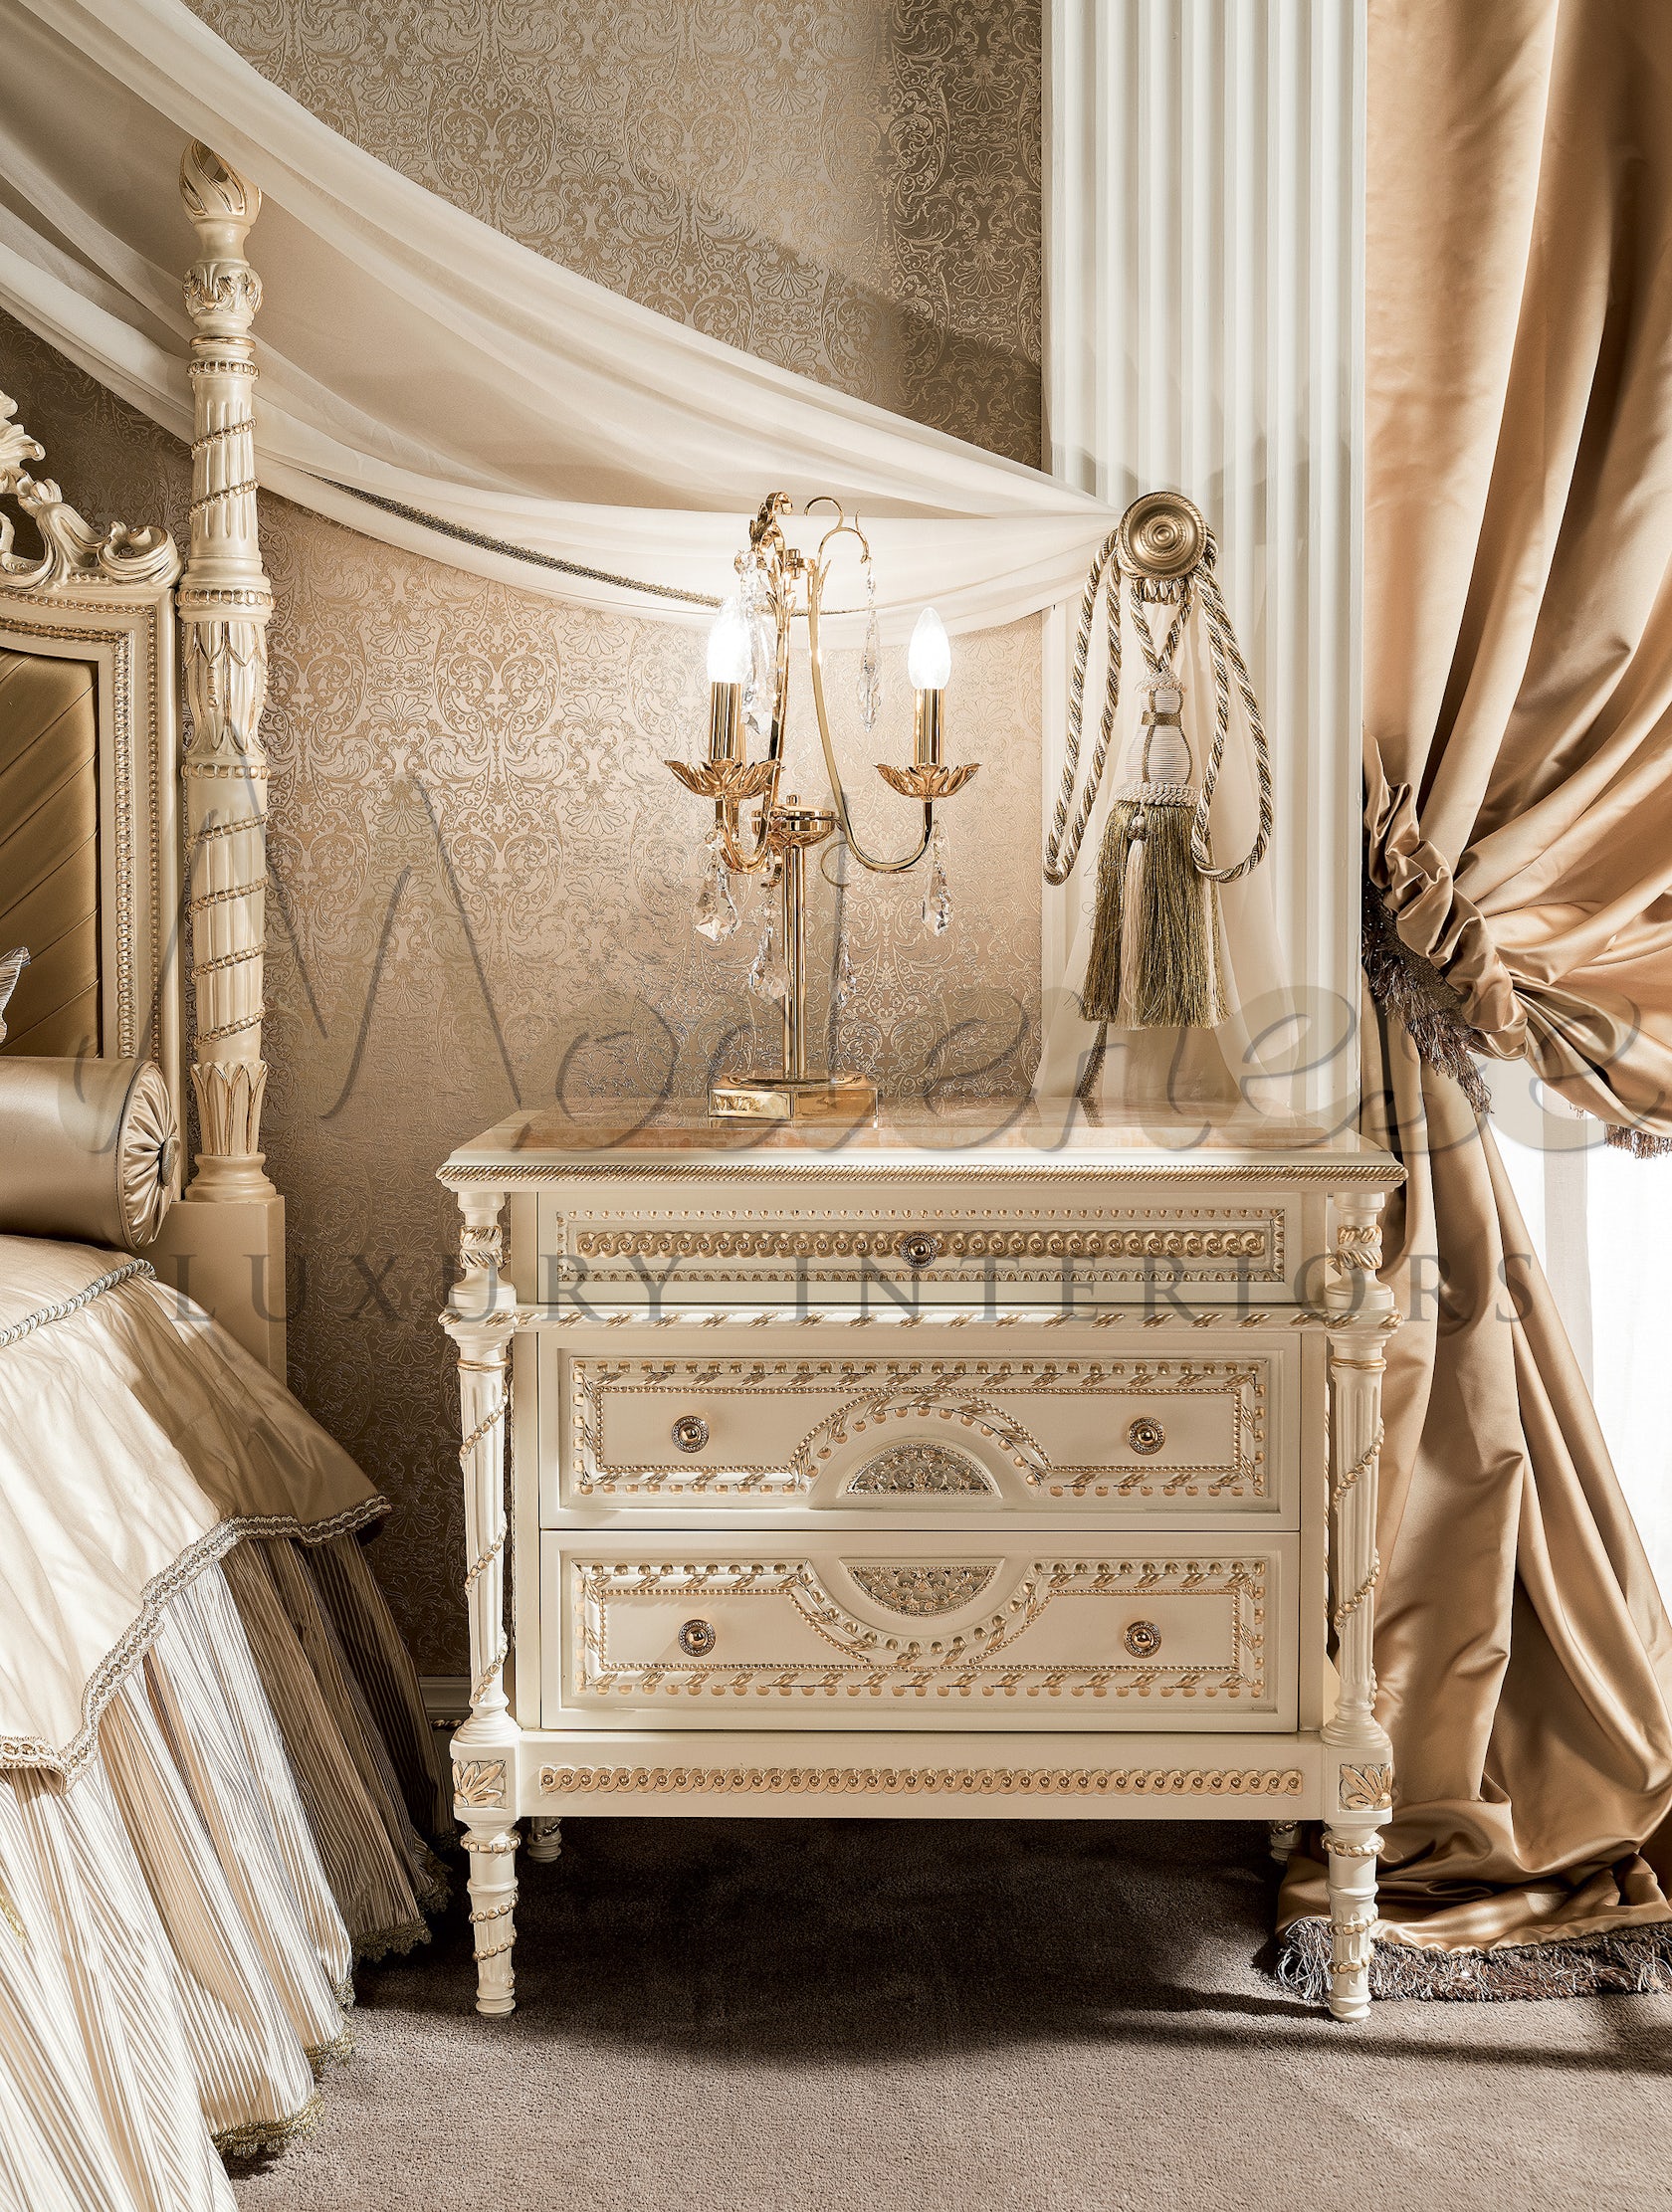 ROYAL Meuble tv escamotable en bois By Modenese Luxury Interiors